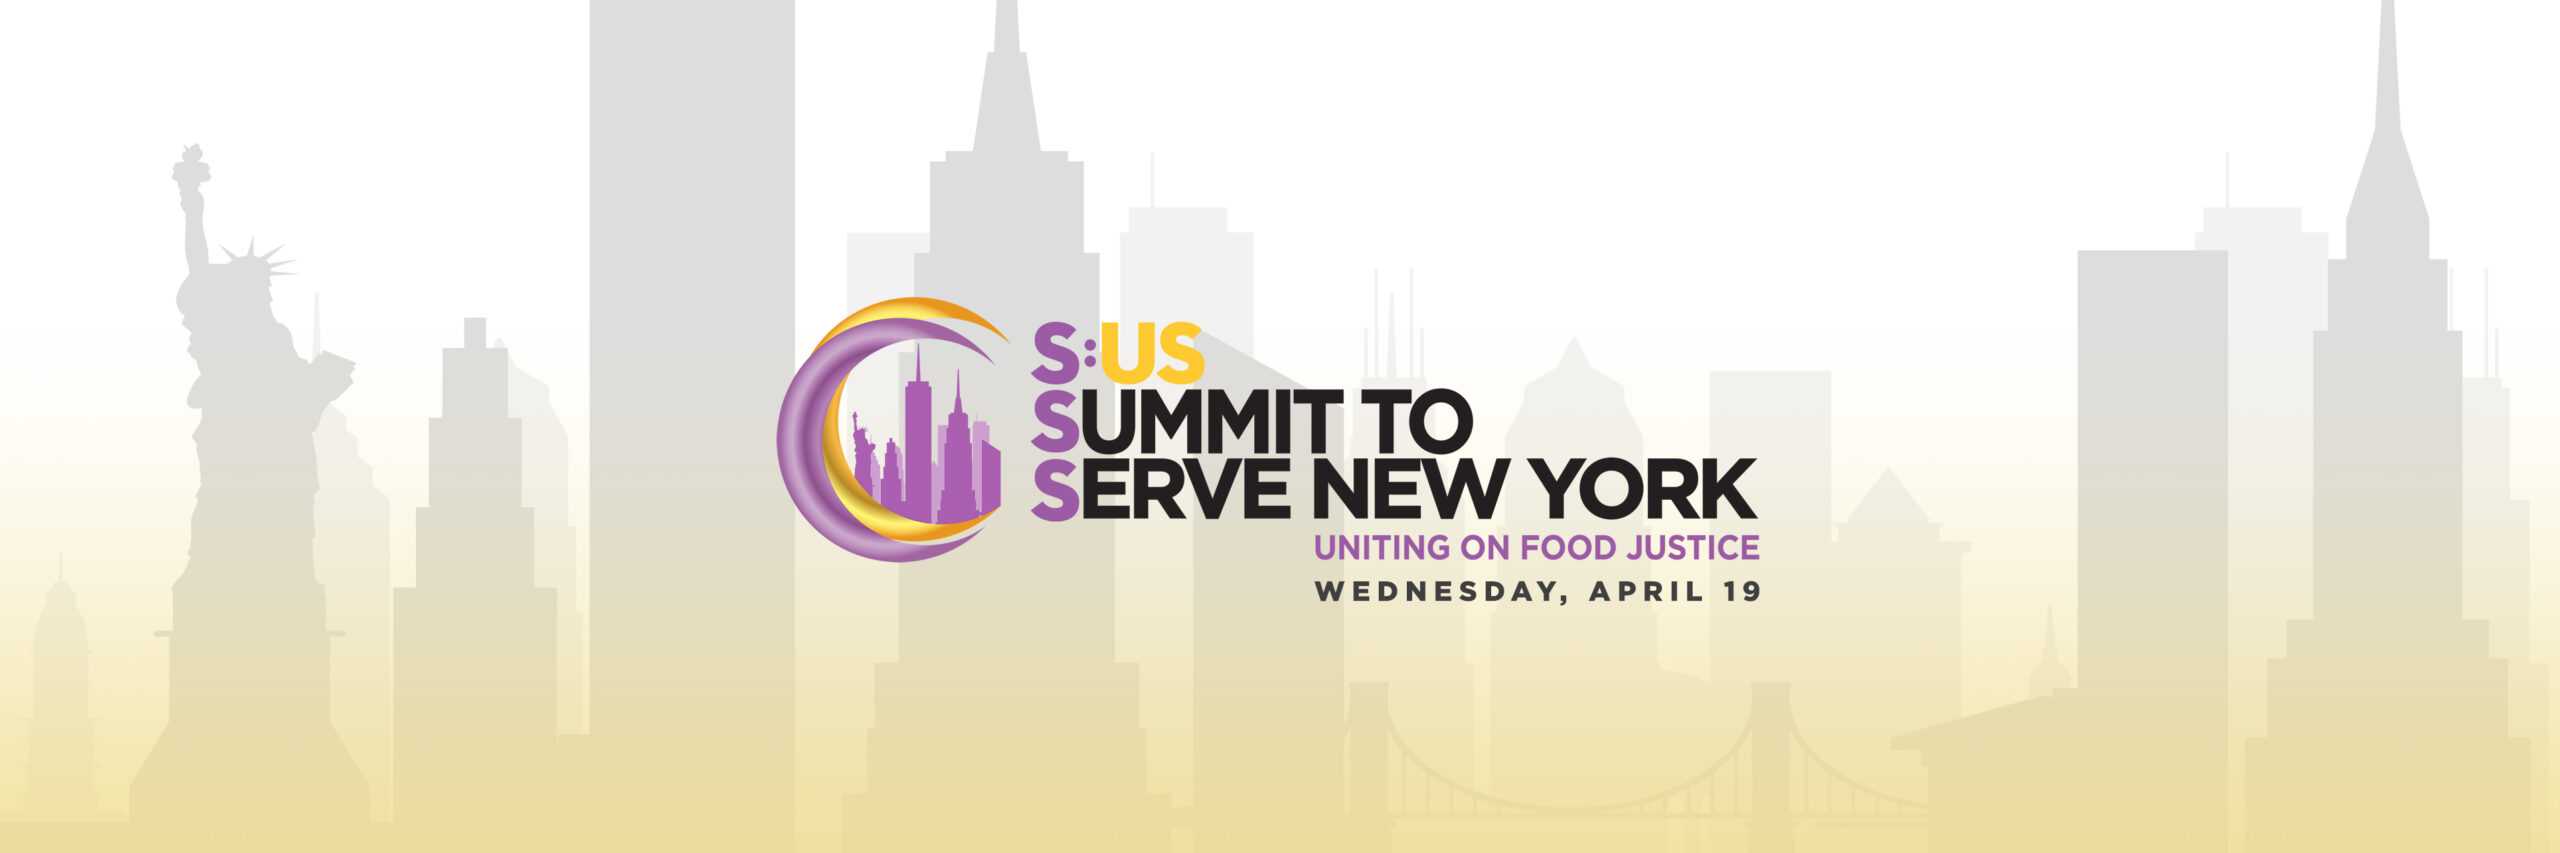 Summit to Serve New York